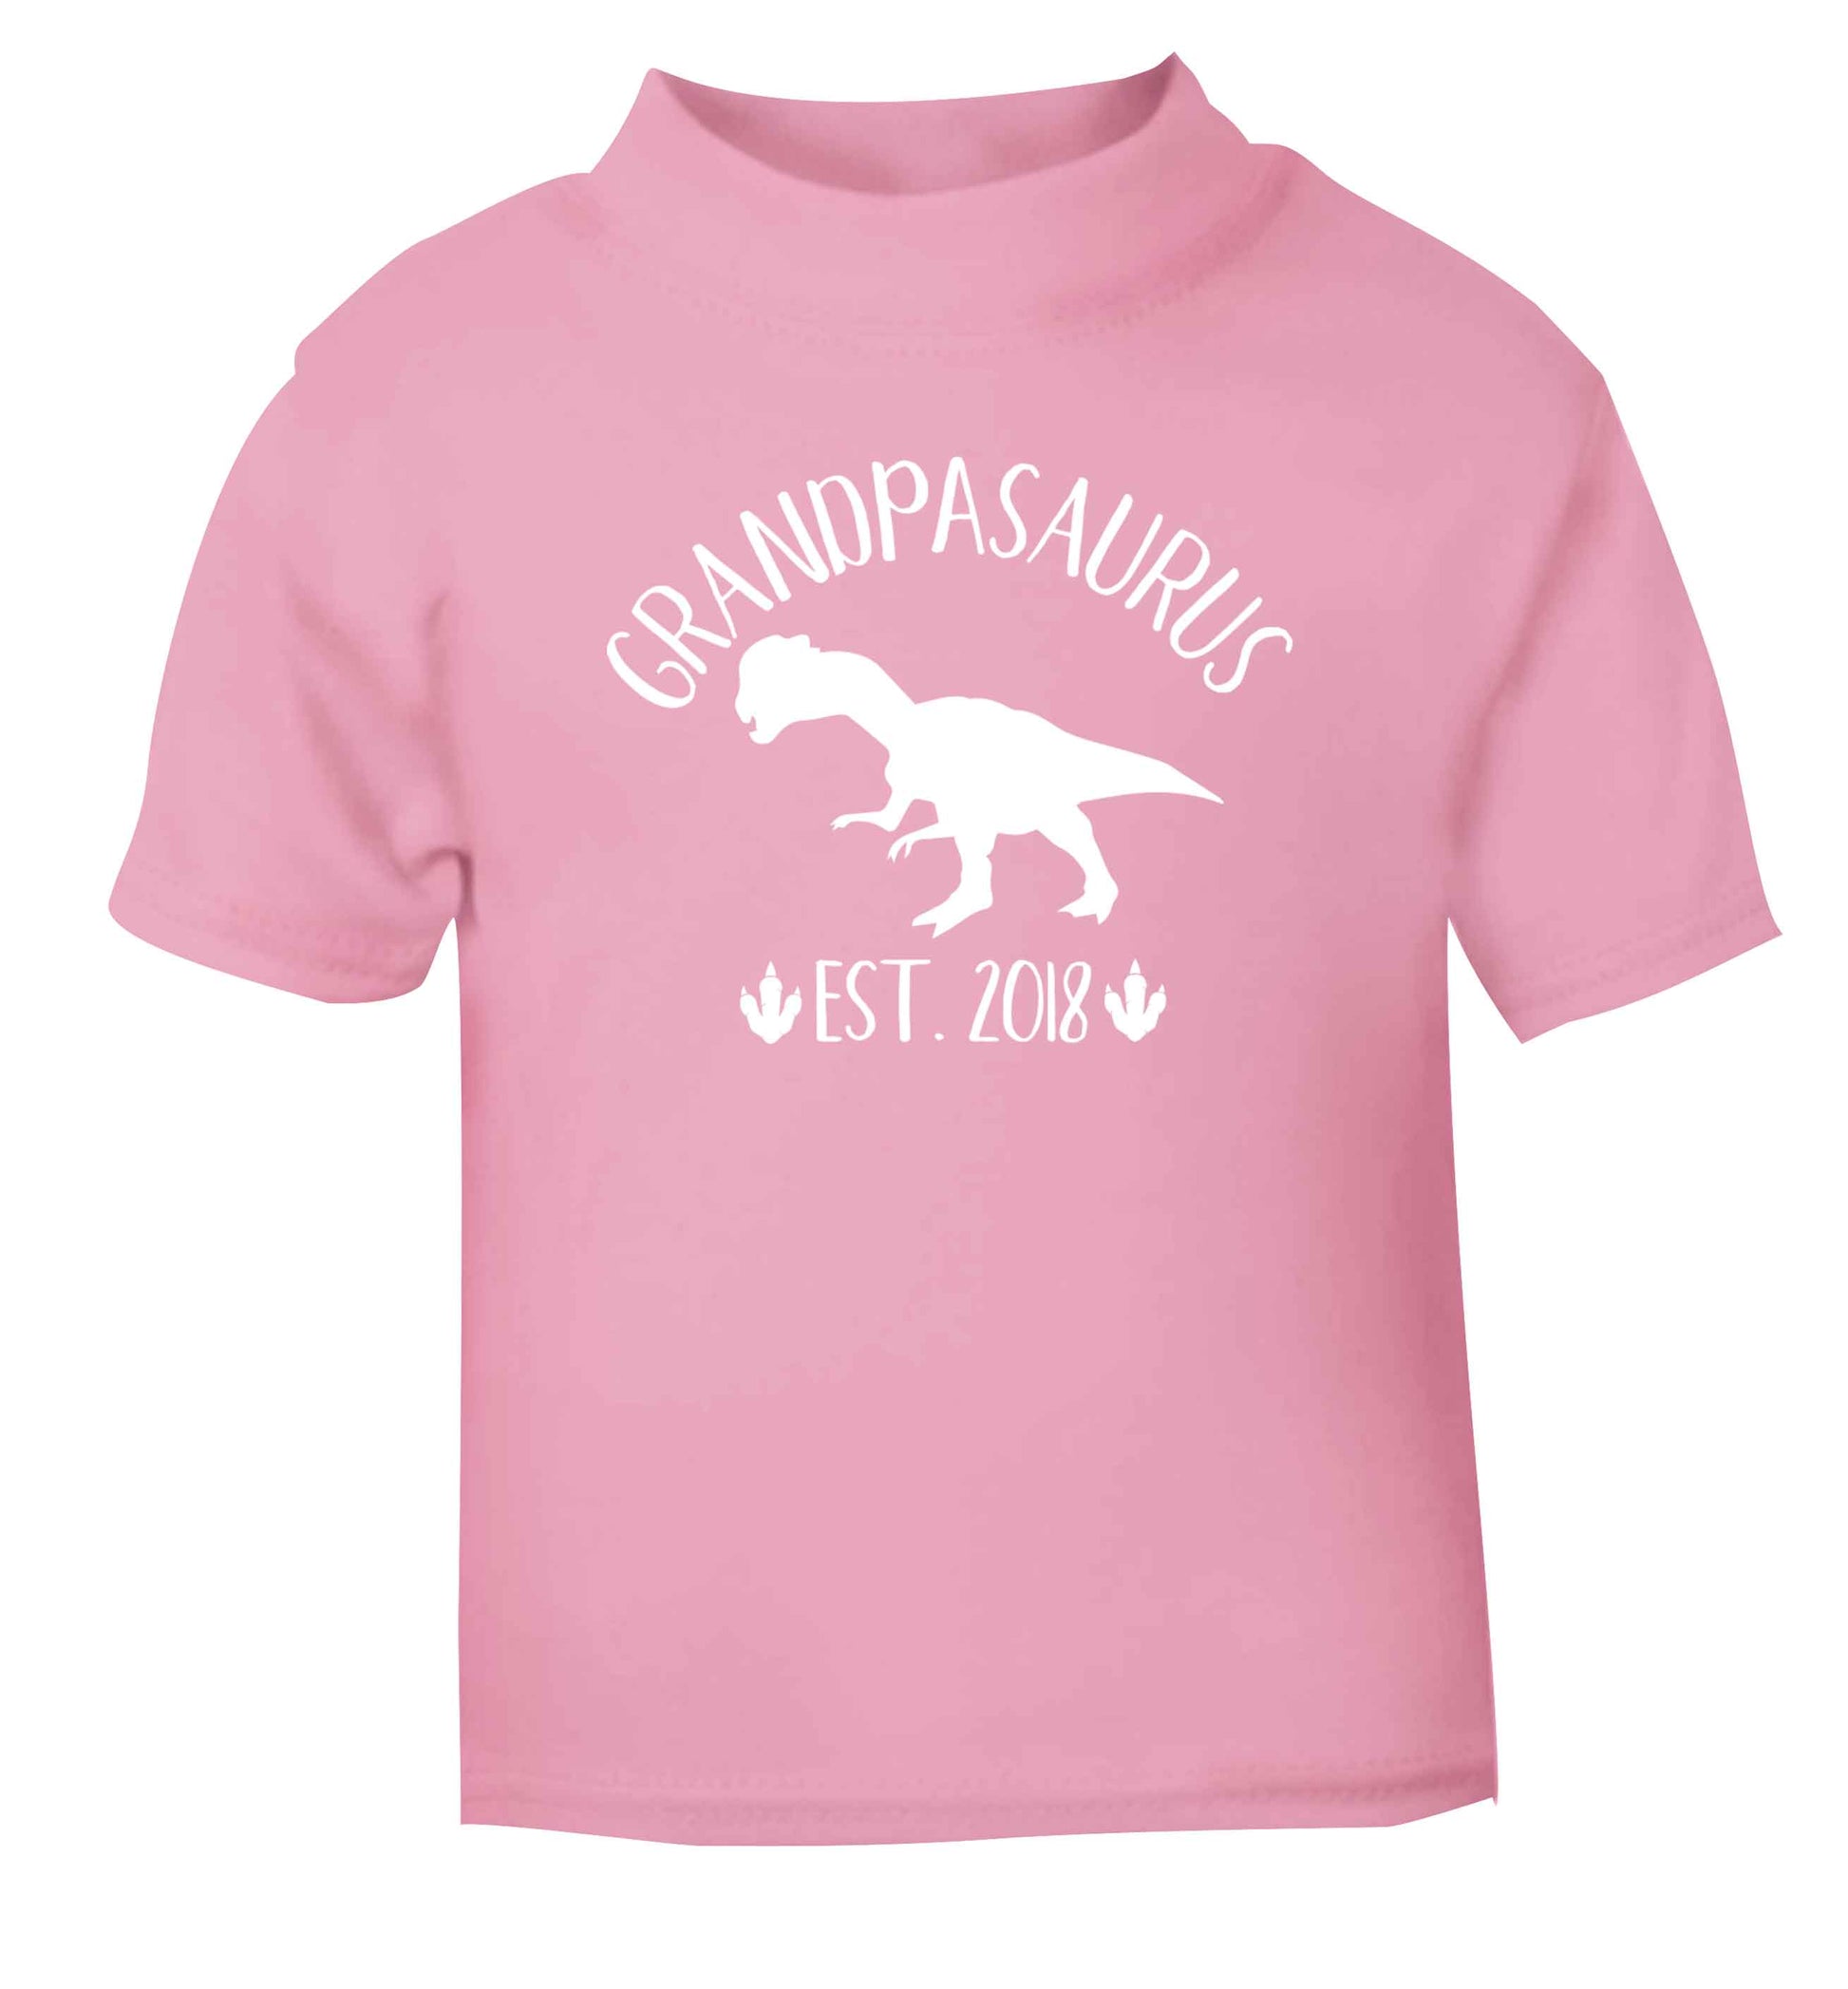 Personalised grandpasaurus since (custom date) light pink Baby Toddler Tshirt 2 Years